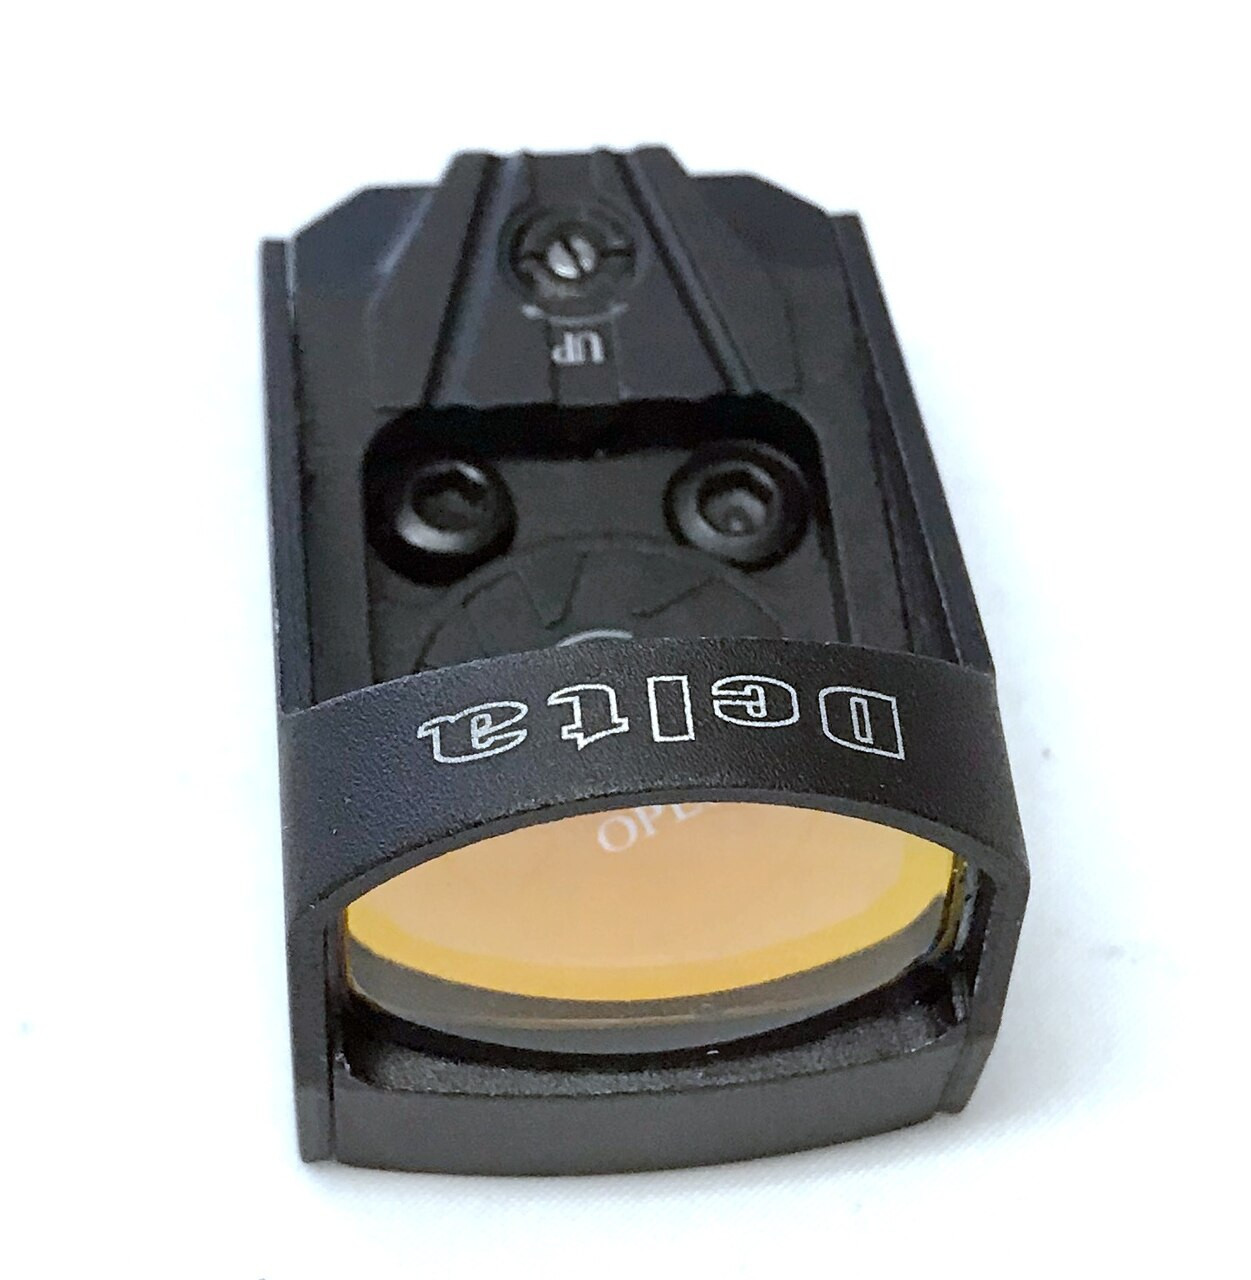 Ade Advanced Optics Delta RD3-012 Red Dot Reflex Sight for SR9,SR9C,SR40C,SR40,SR45 Pistol